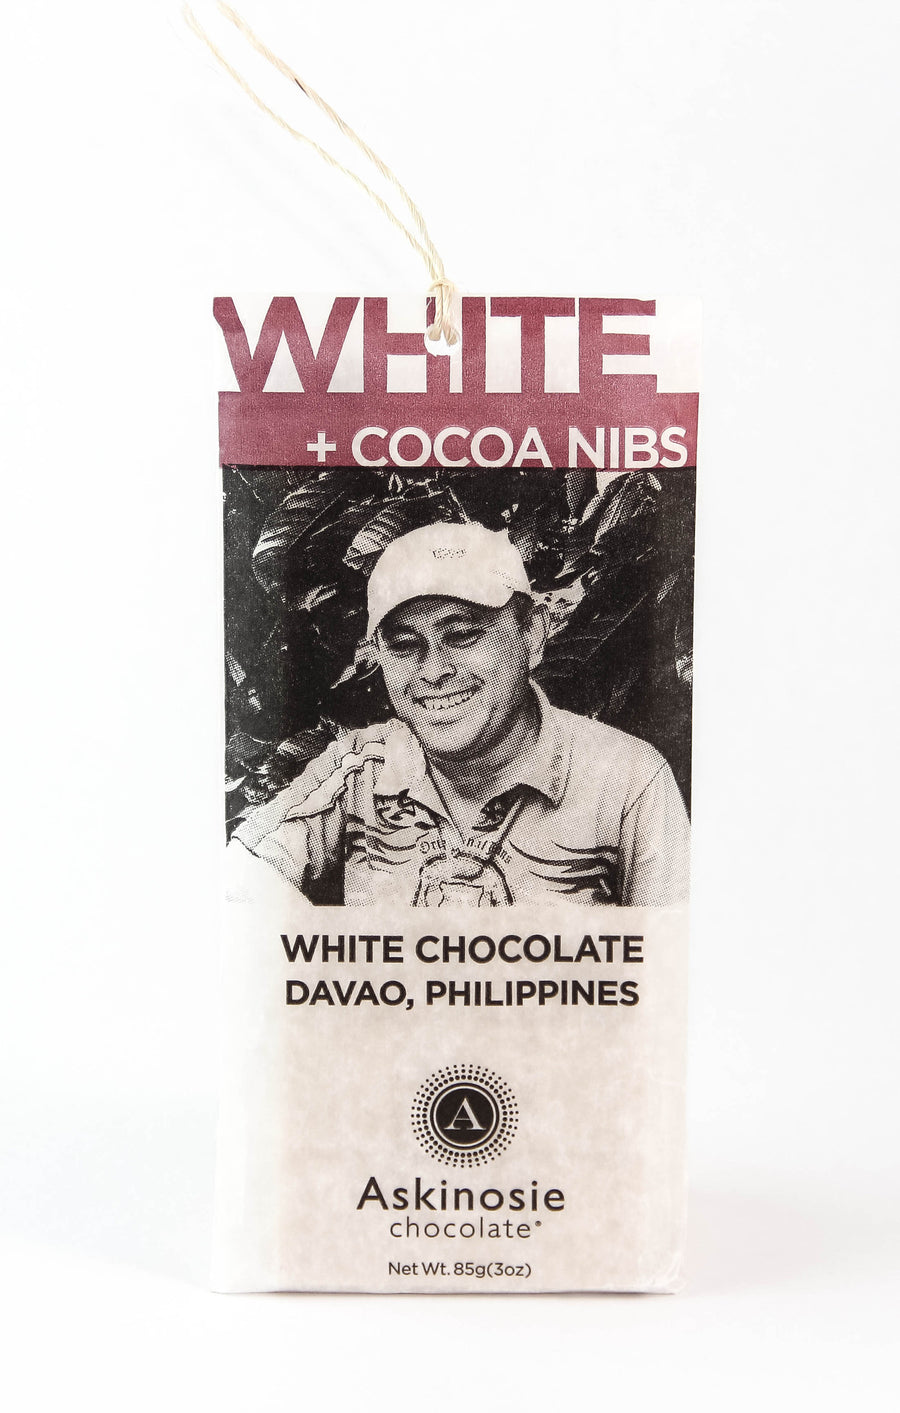 Askinosie Davao 34% White Chocolate with Nibs